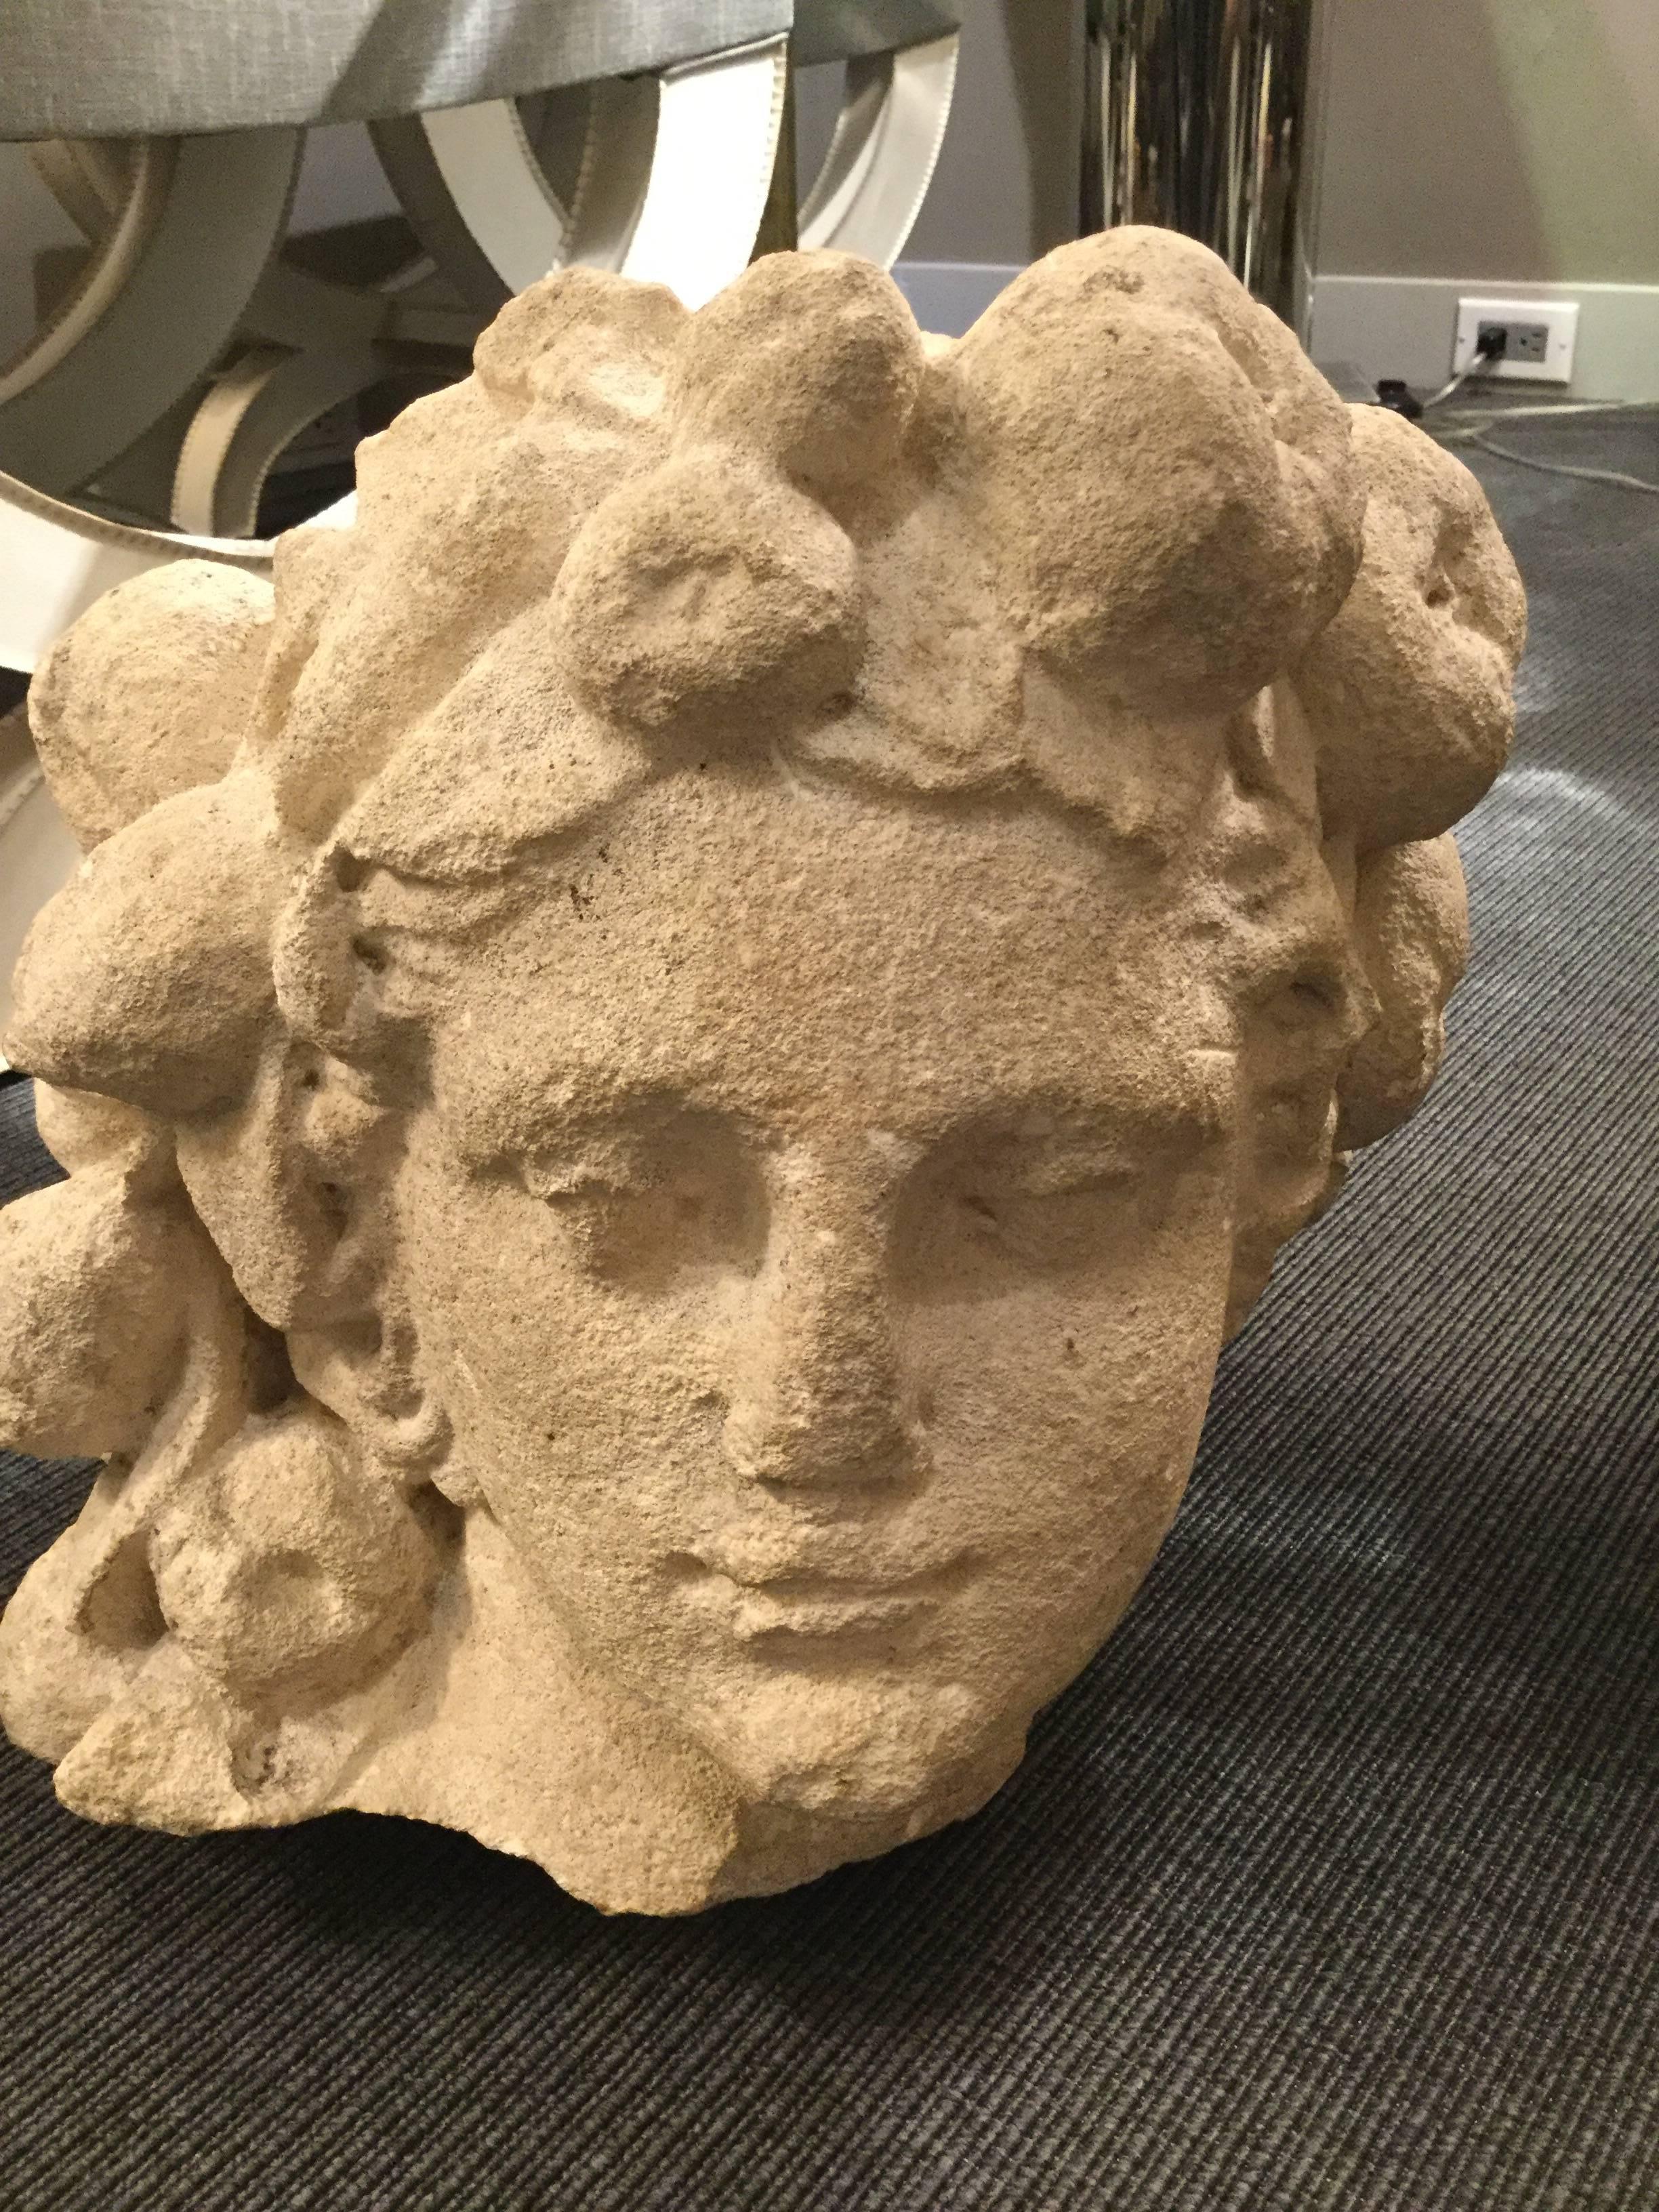 Stone sculpture depicting Pomona, Goddess of fruitful abundance in ancient Roman mythology.
 